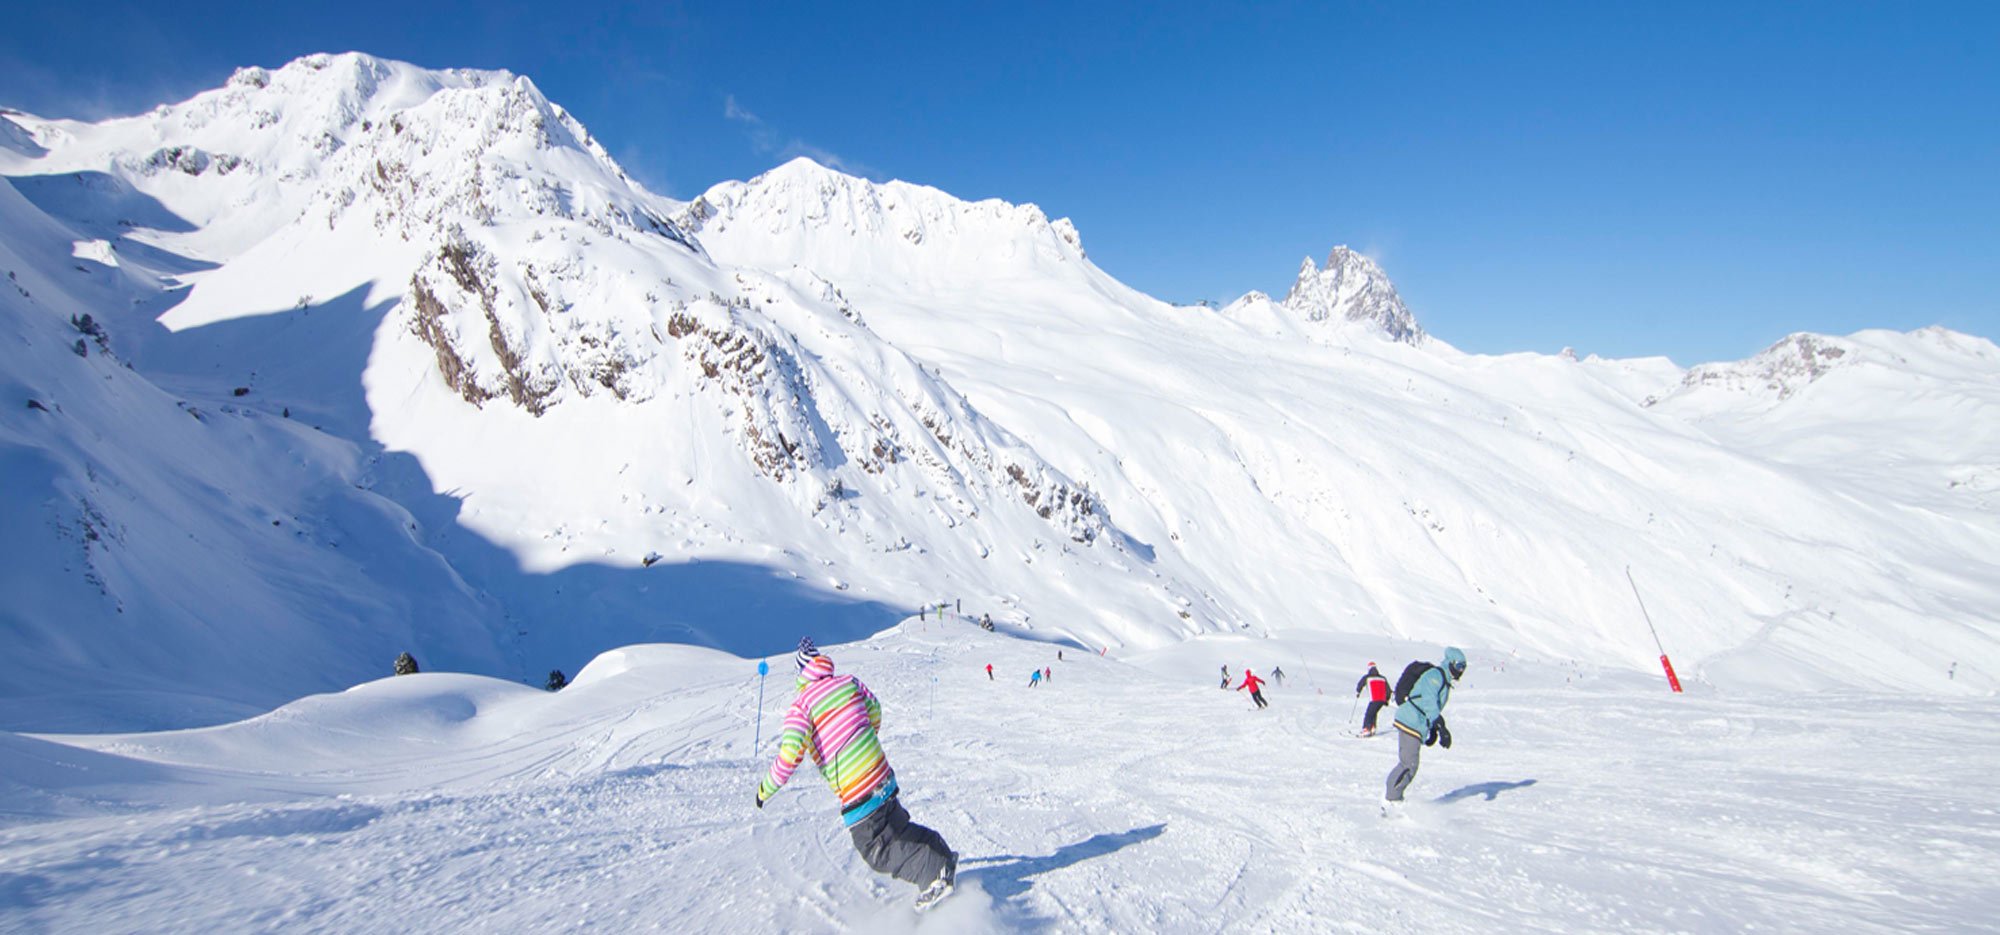 Ski Pirineos: Aramón integra a Candanchú en su nuevo forfait - Noticias -  Nevasport.com